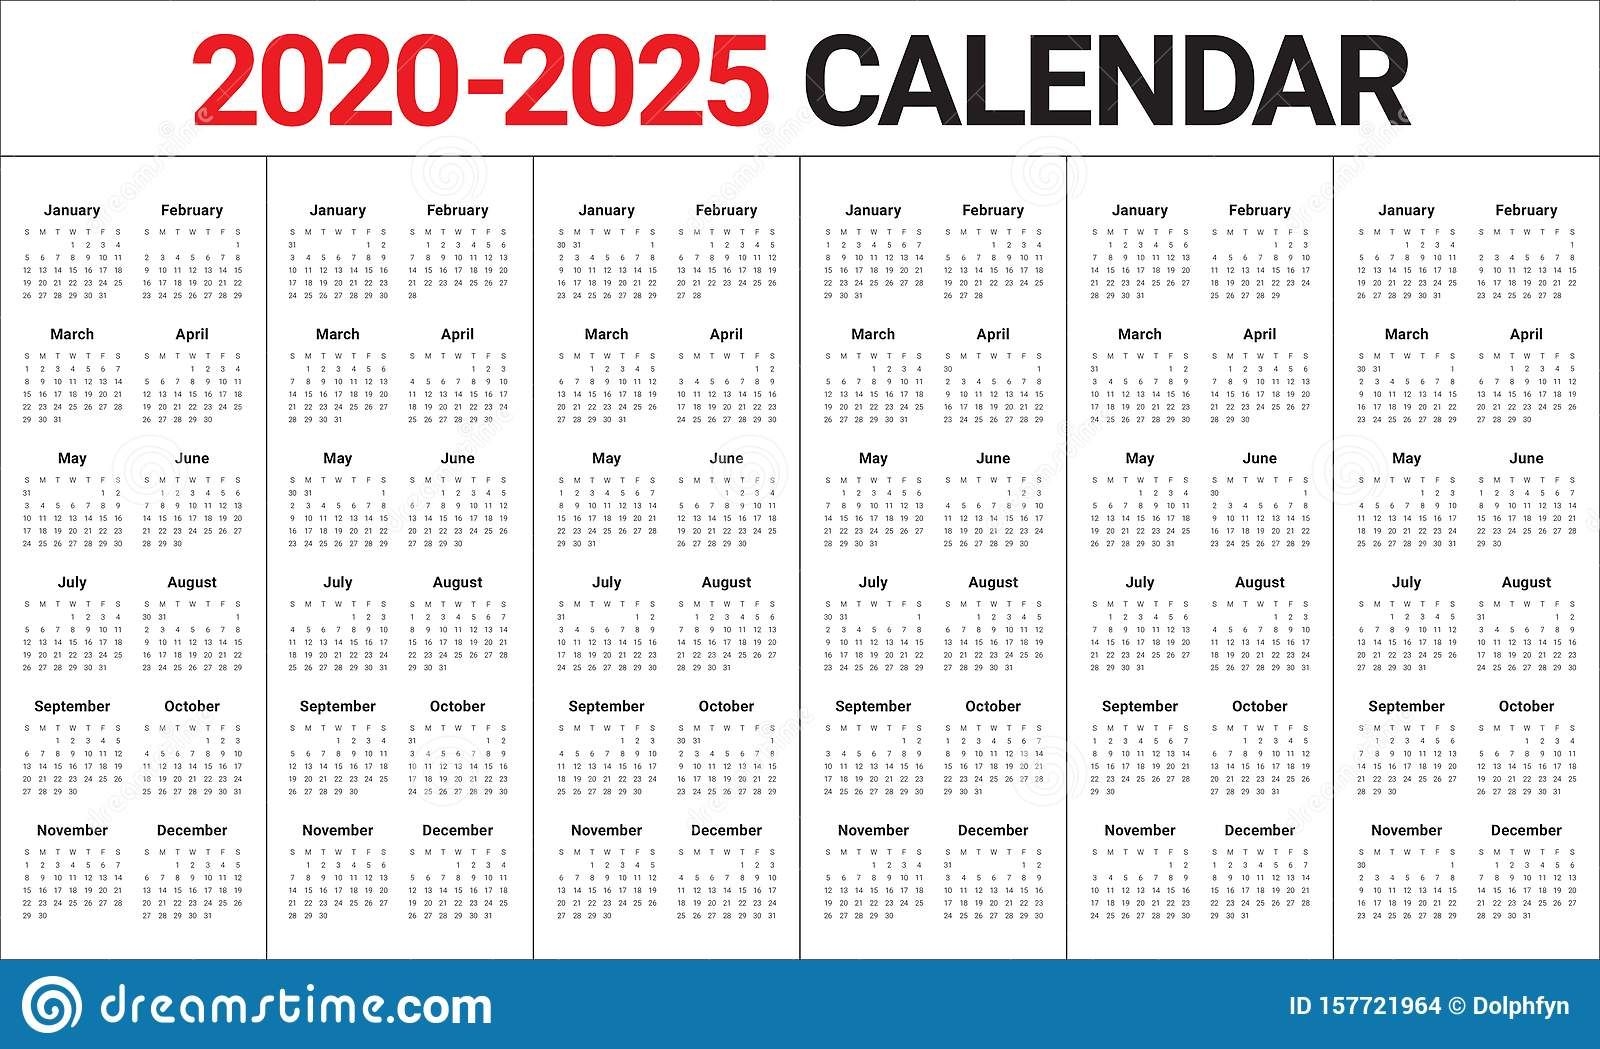 year 2020 2021 2022 2023 2024 2025 calendar vector design